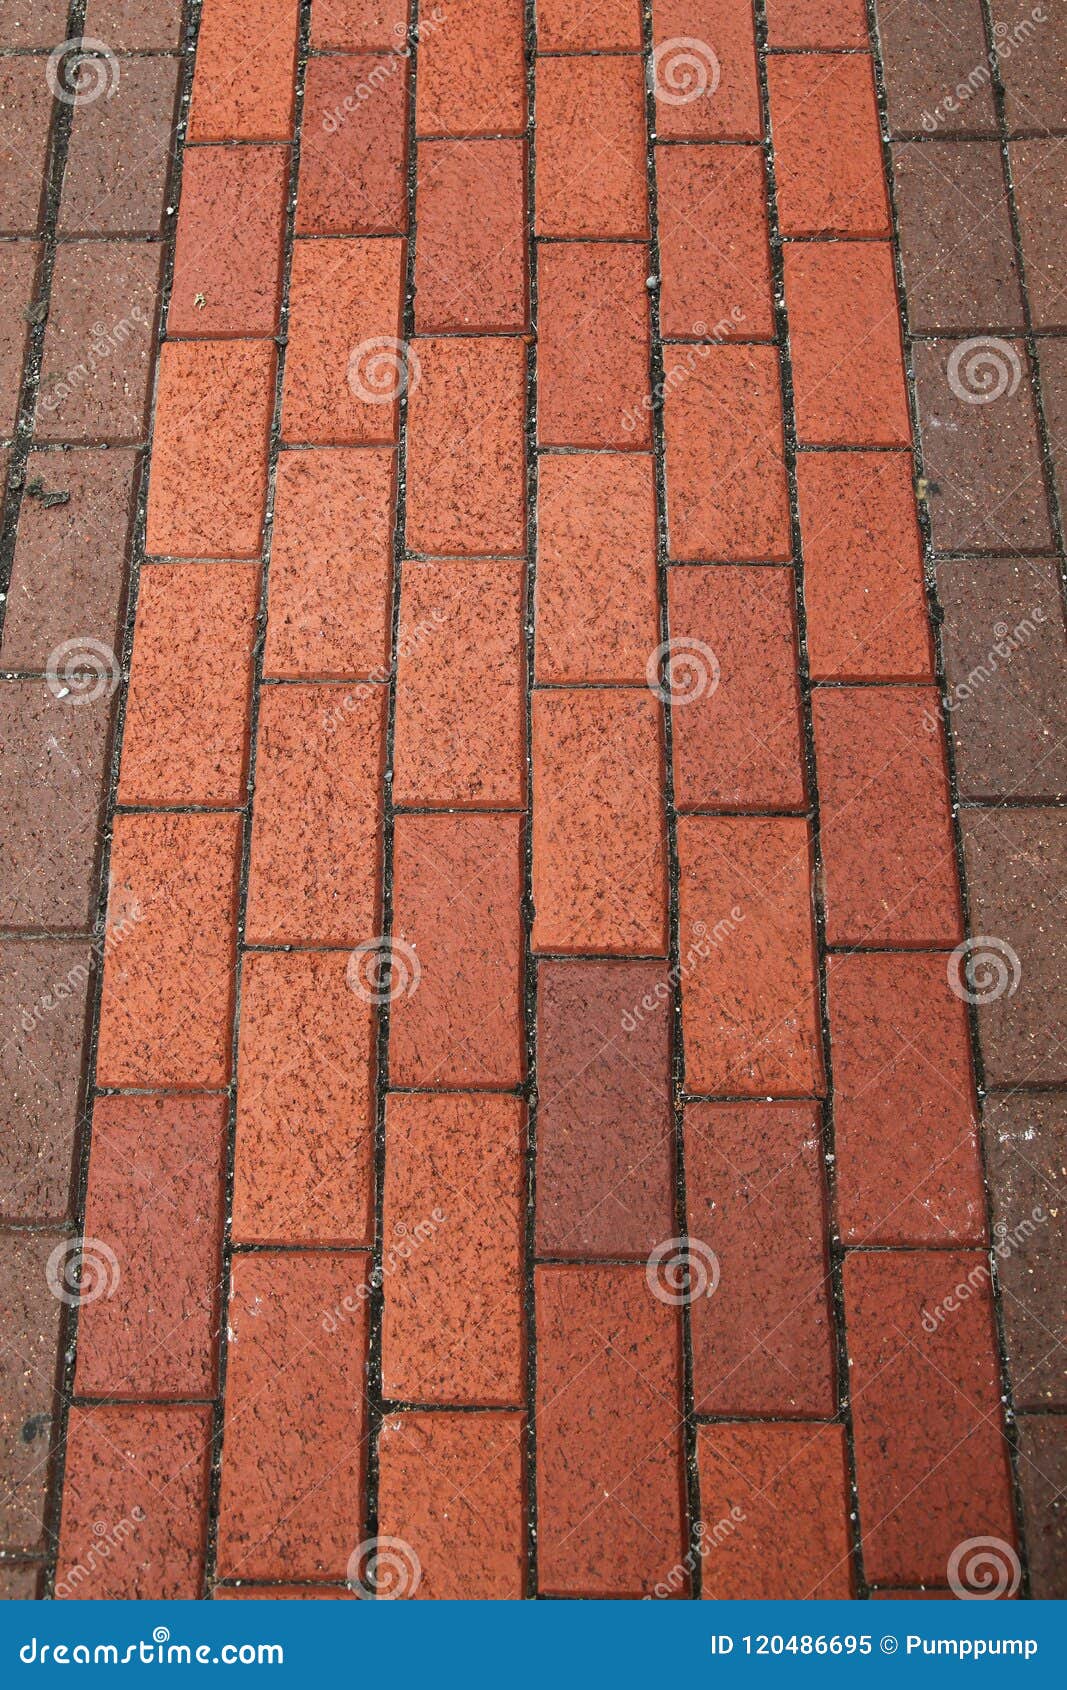 Red Brick Flooring on a Sidewalk Outdoors in USA. Red Brick Flooring on a Sidewalk Outdoors in New York,USA